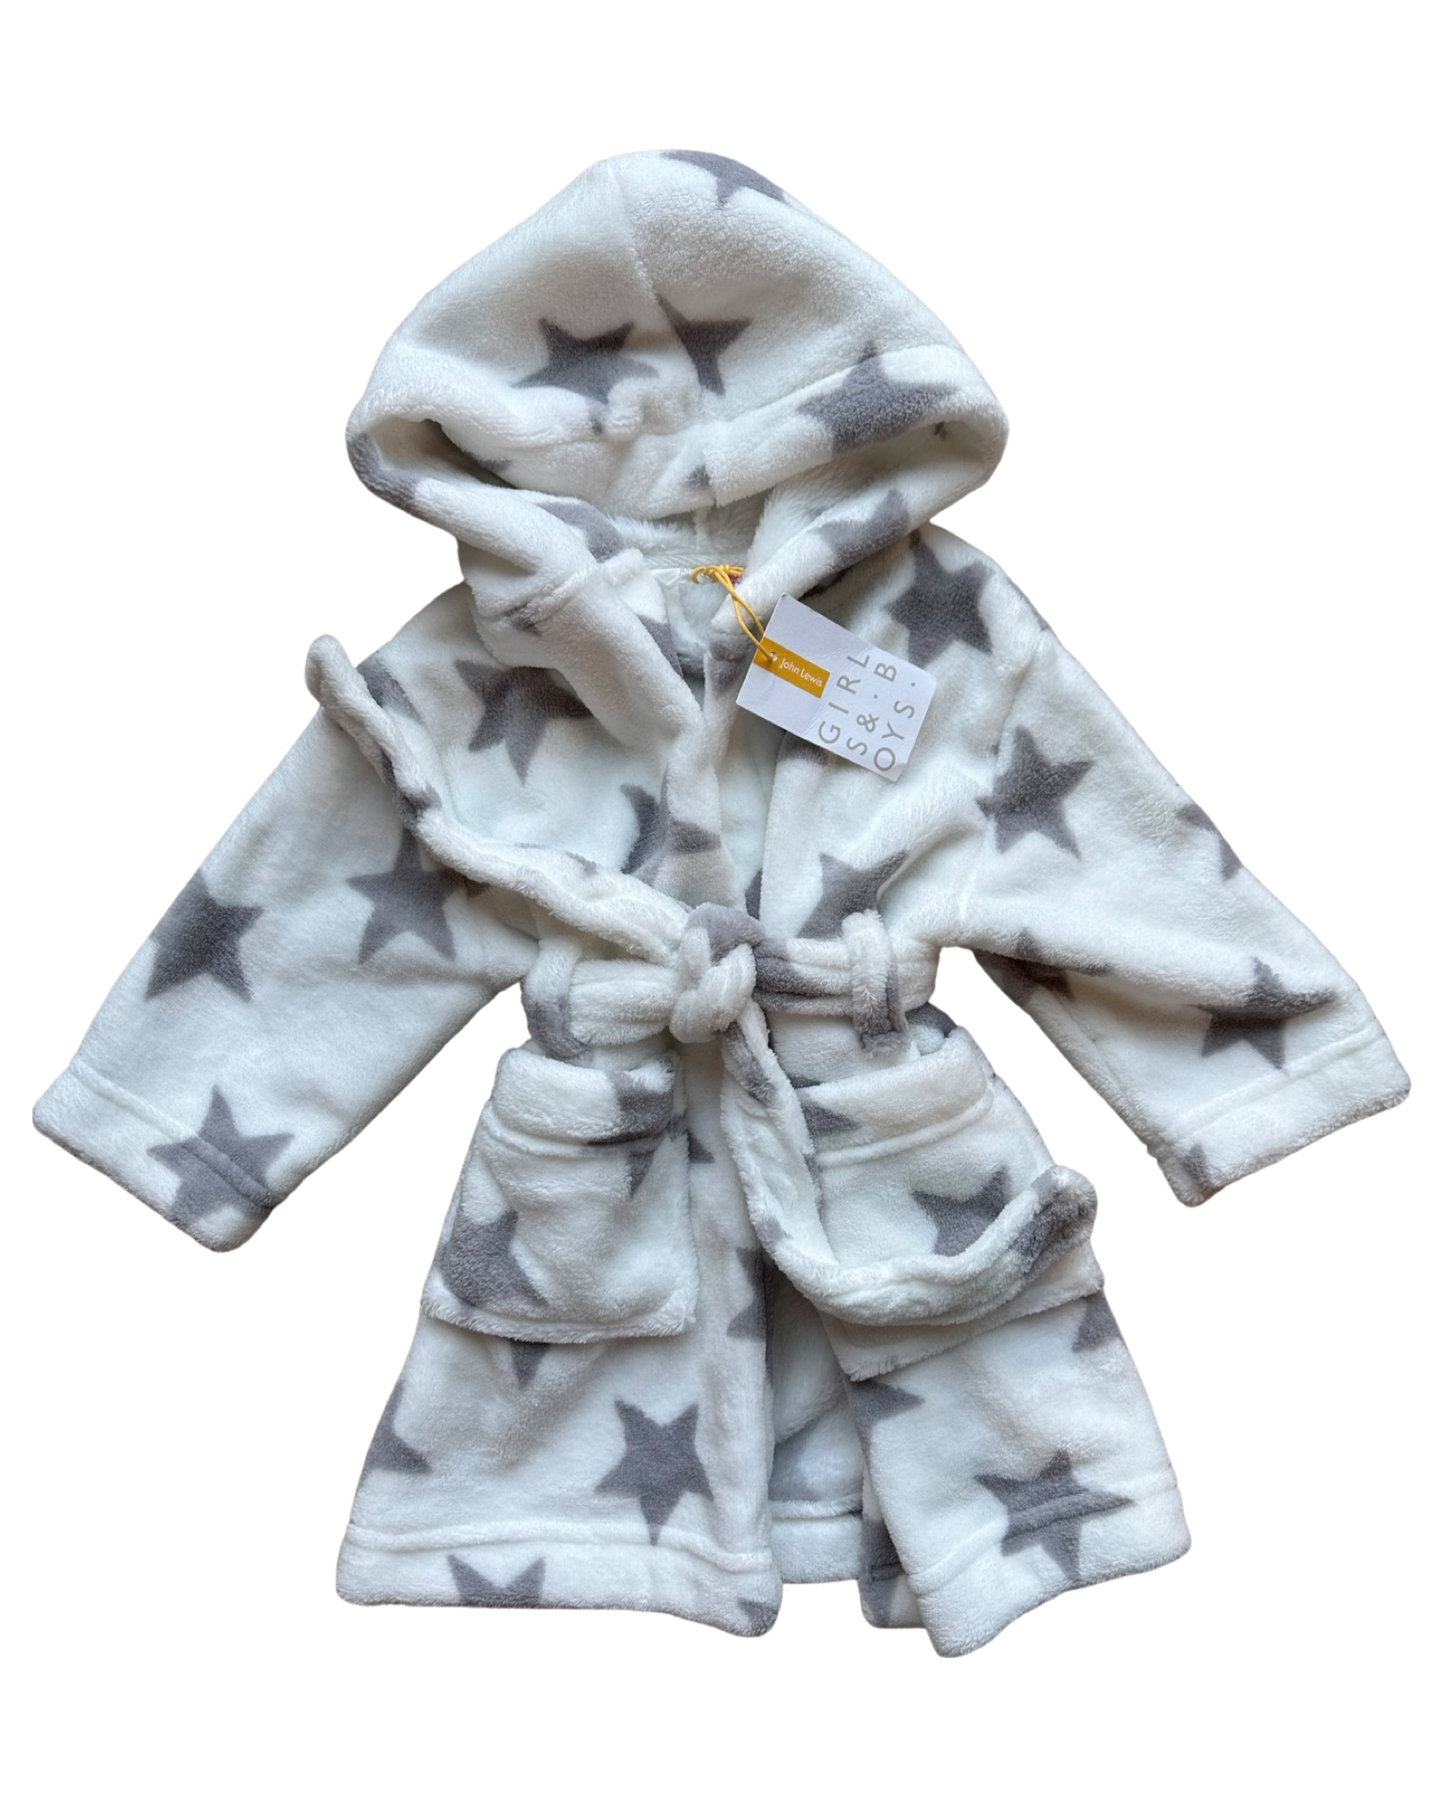 John Lewis cream & grey star print baby towelling robe (size 3-6mths)